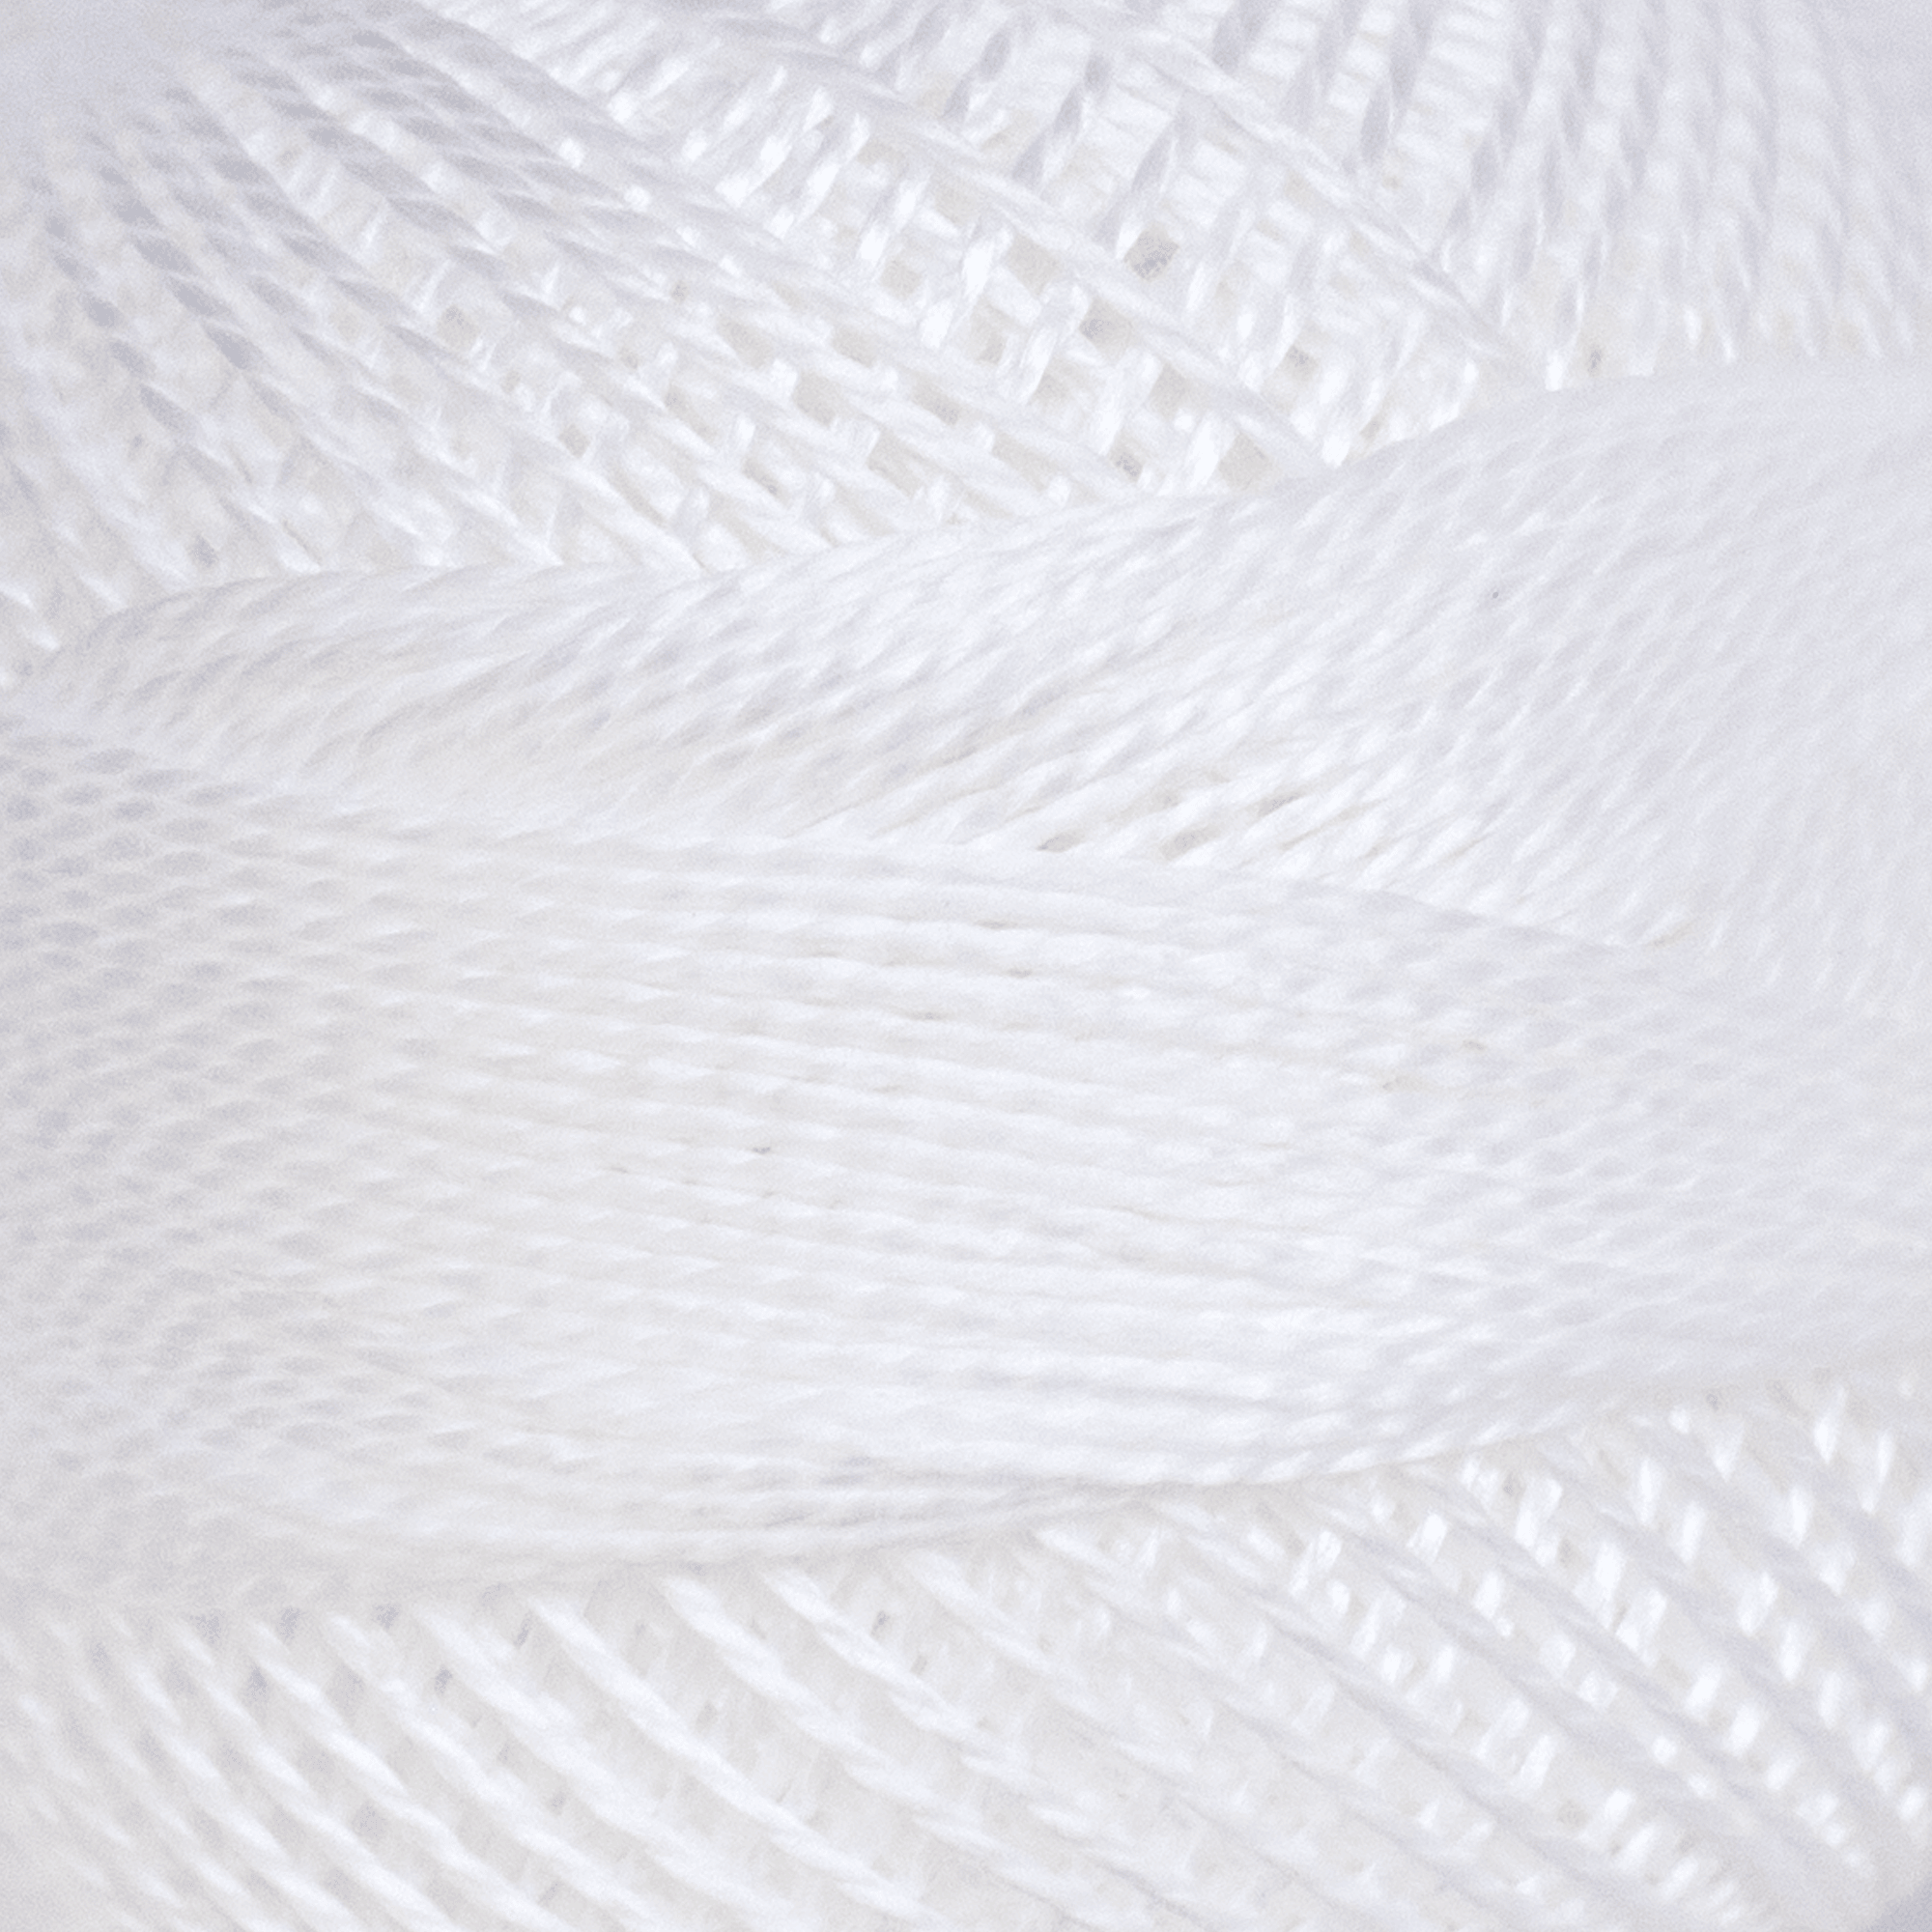 Luca-S Premium Coton Perlé Embroidery Thread Pearl Cotton - HobbyJobby